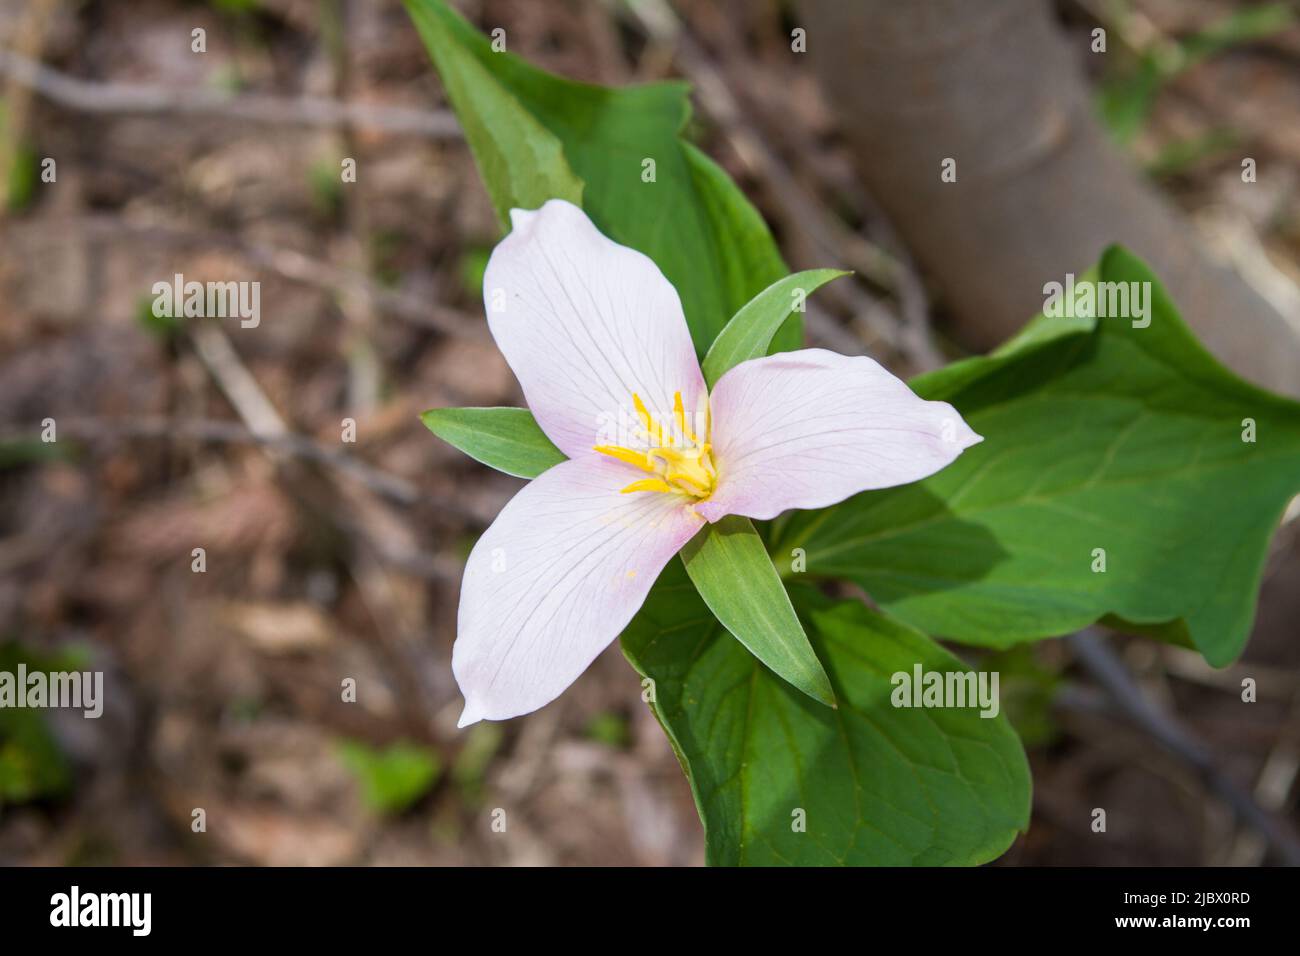 A single Western Trillium (Trillium ovatum) flower blooming on the forest floor in Eastern Washington, USA. Stock Photo